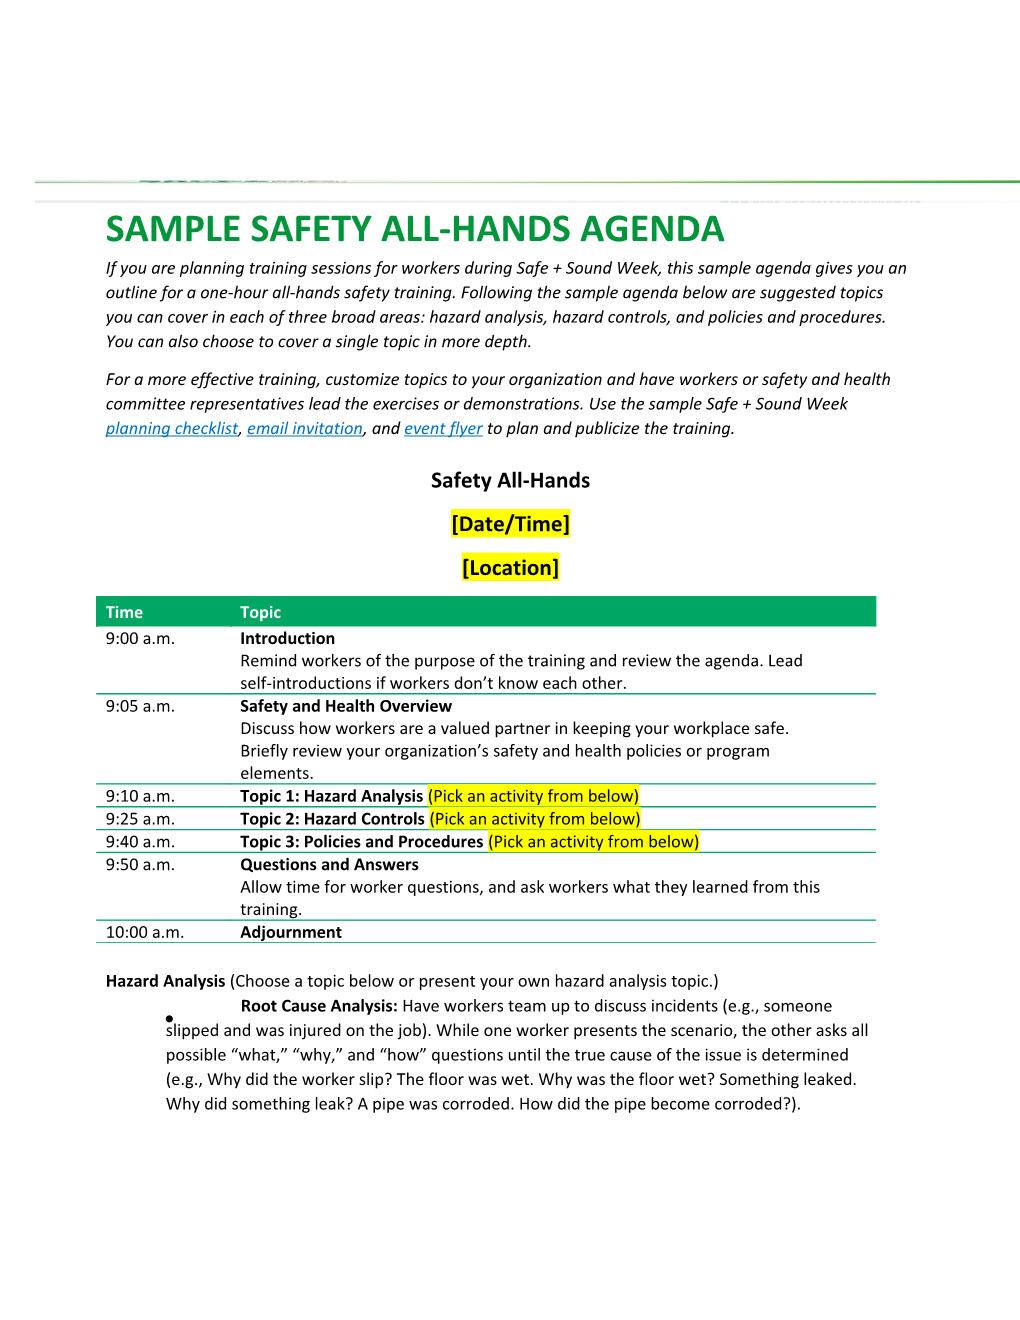 Sample Safety All-Hands Agenda